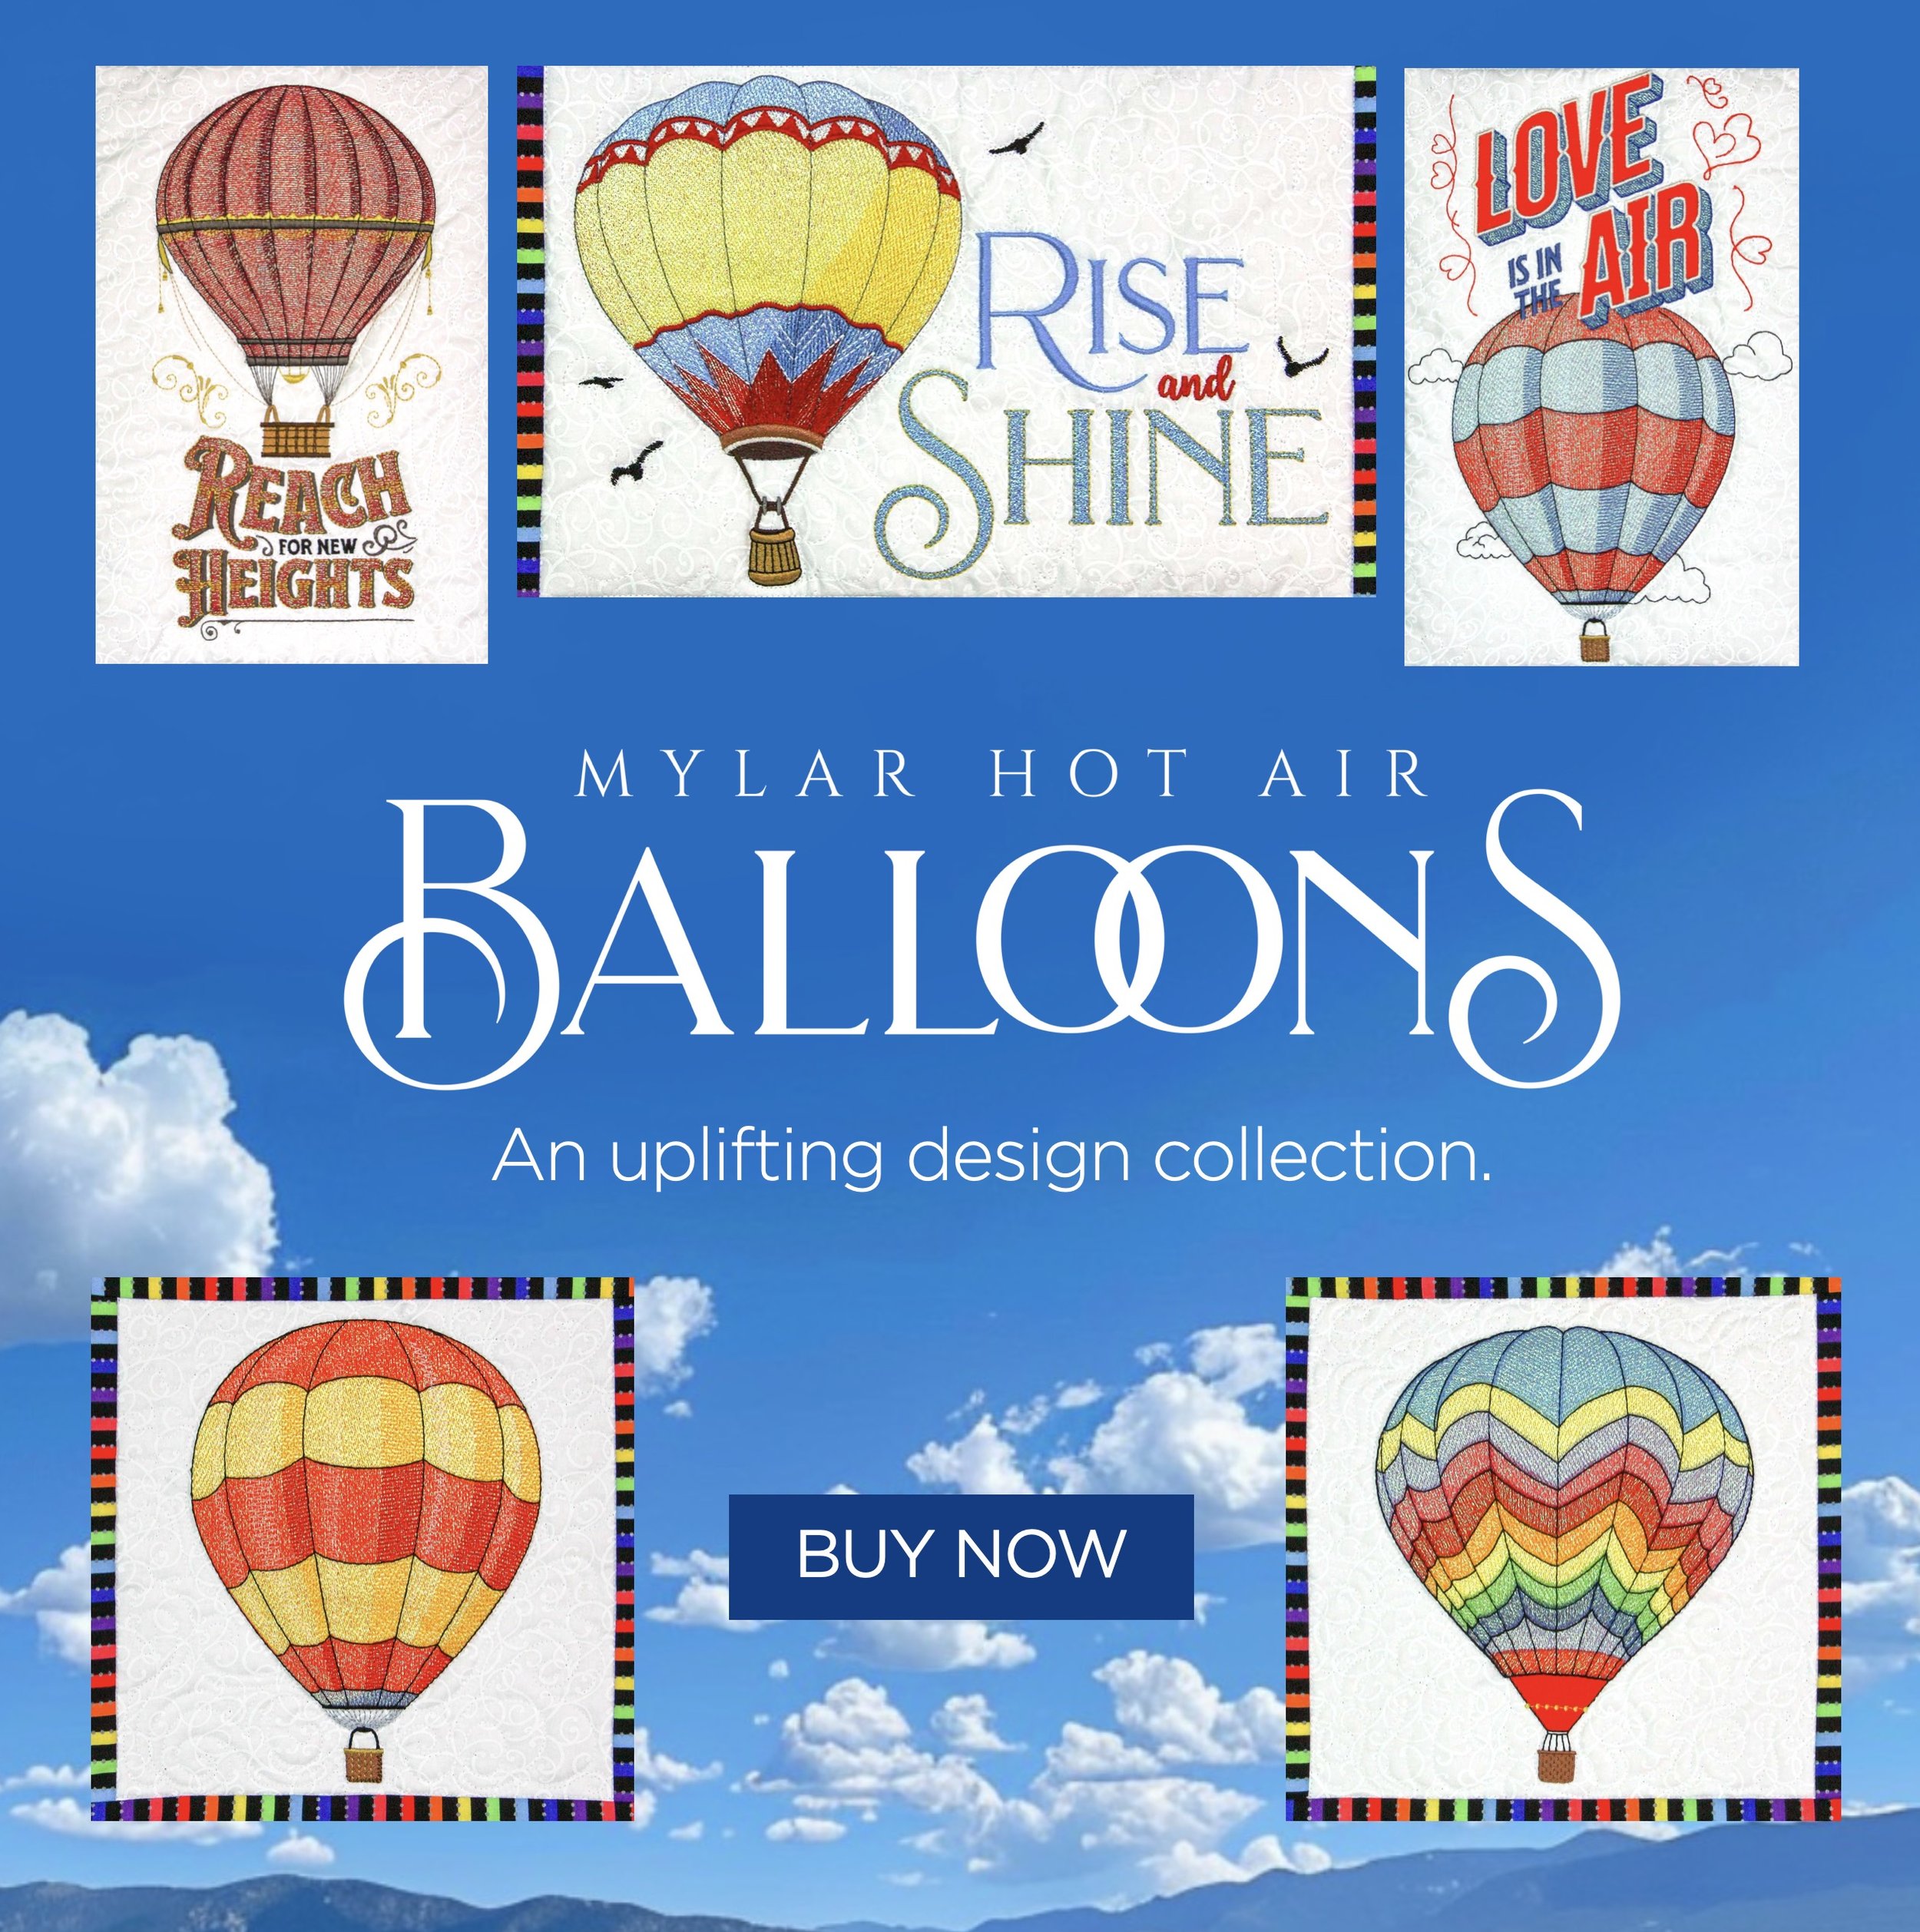 Mylar Hot Air Balloons